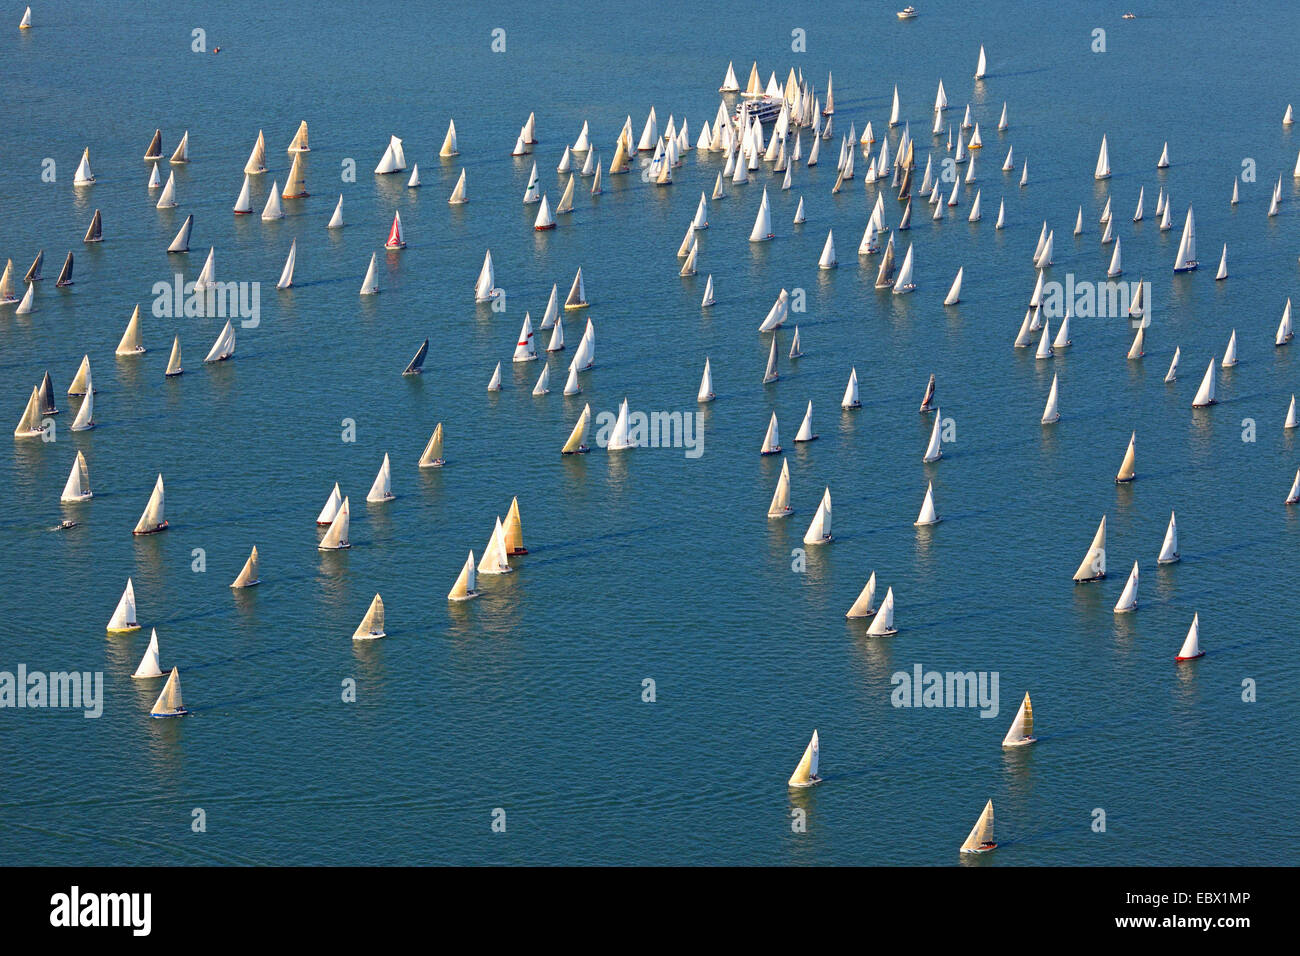 sailing regatta Rundum, Germany, Lake Constance Stock Photo